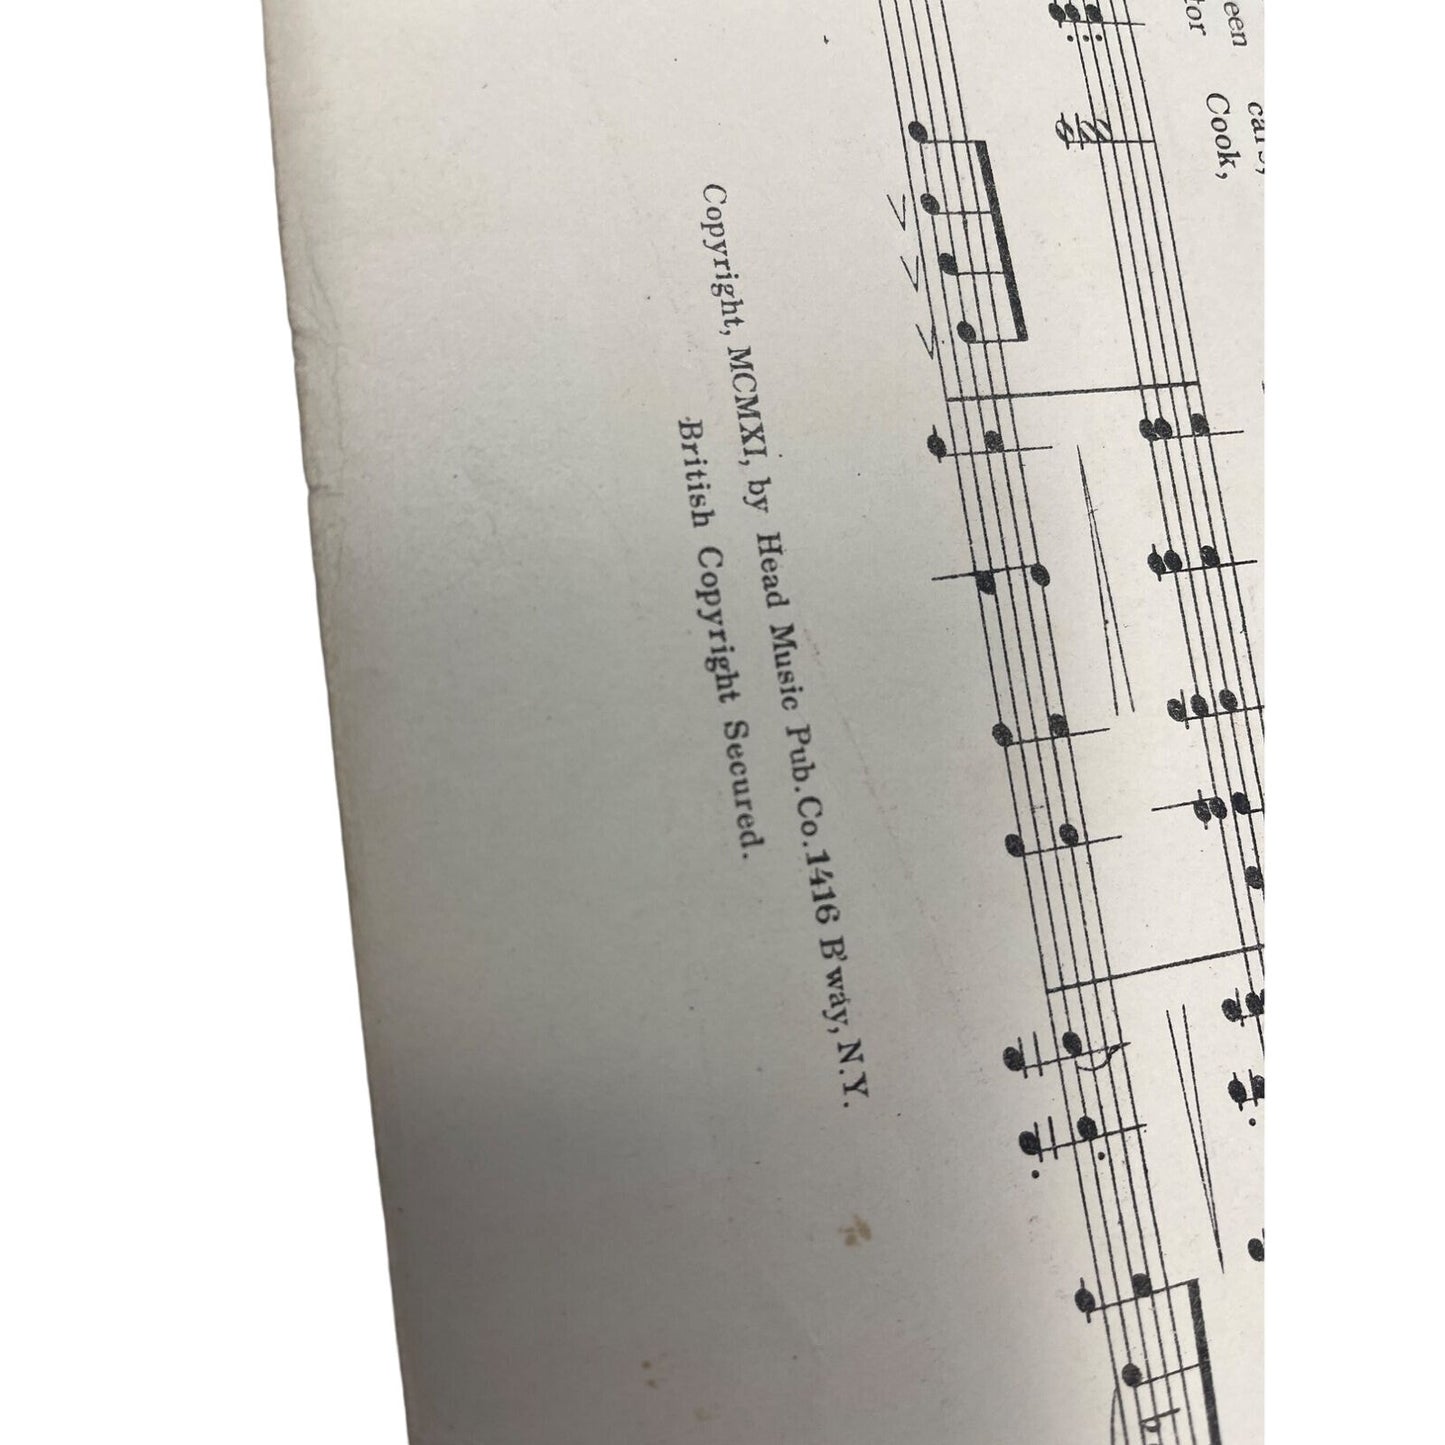 1911 That Railroad Rag Large Sheet Music Nat Vincent Ed Bimberg